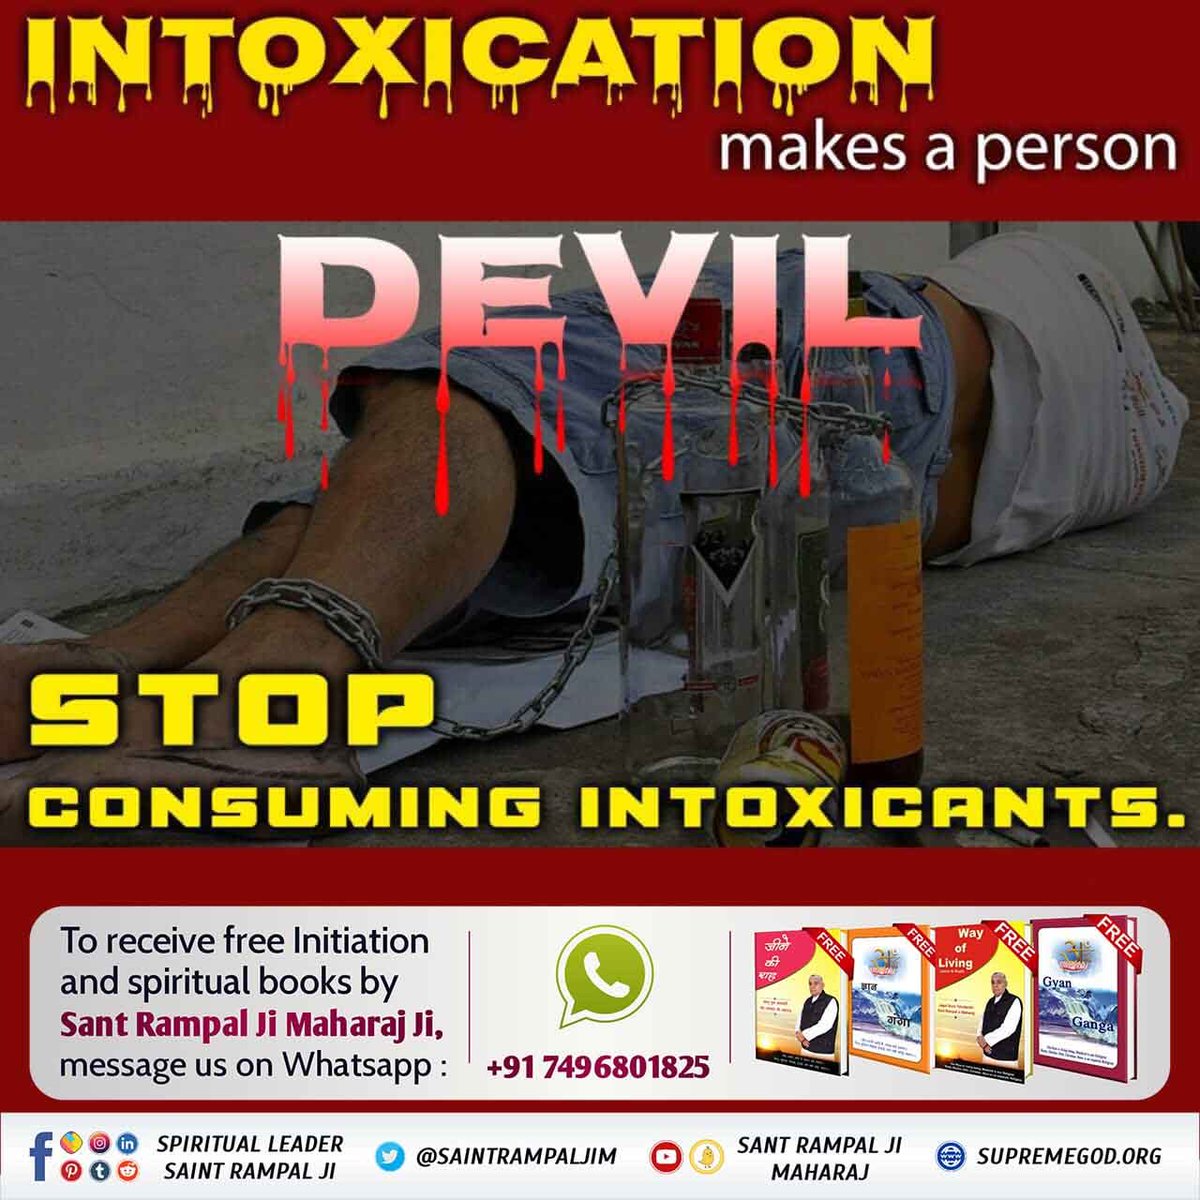 #नशा_एकअभिशापहै_कैसे_मुक्तिहो
INTOXICATION 
makes a person
DEVIL.
STOP CONSUMING INTOXICANTS.
Visit our Saint Rampal Ji Maharaj YouTube Channel for more information.
#GodMorningThursday